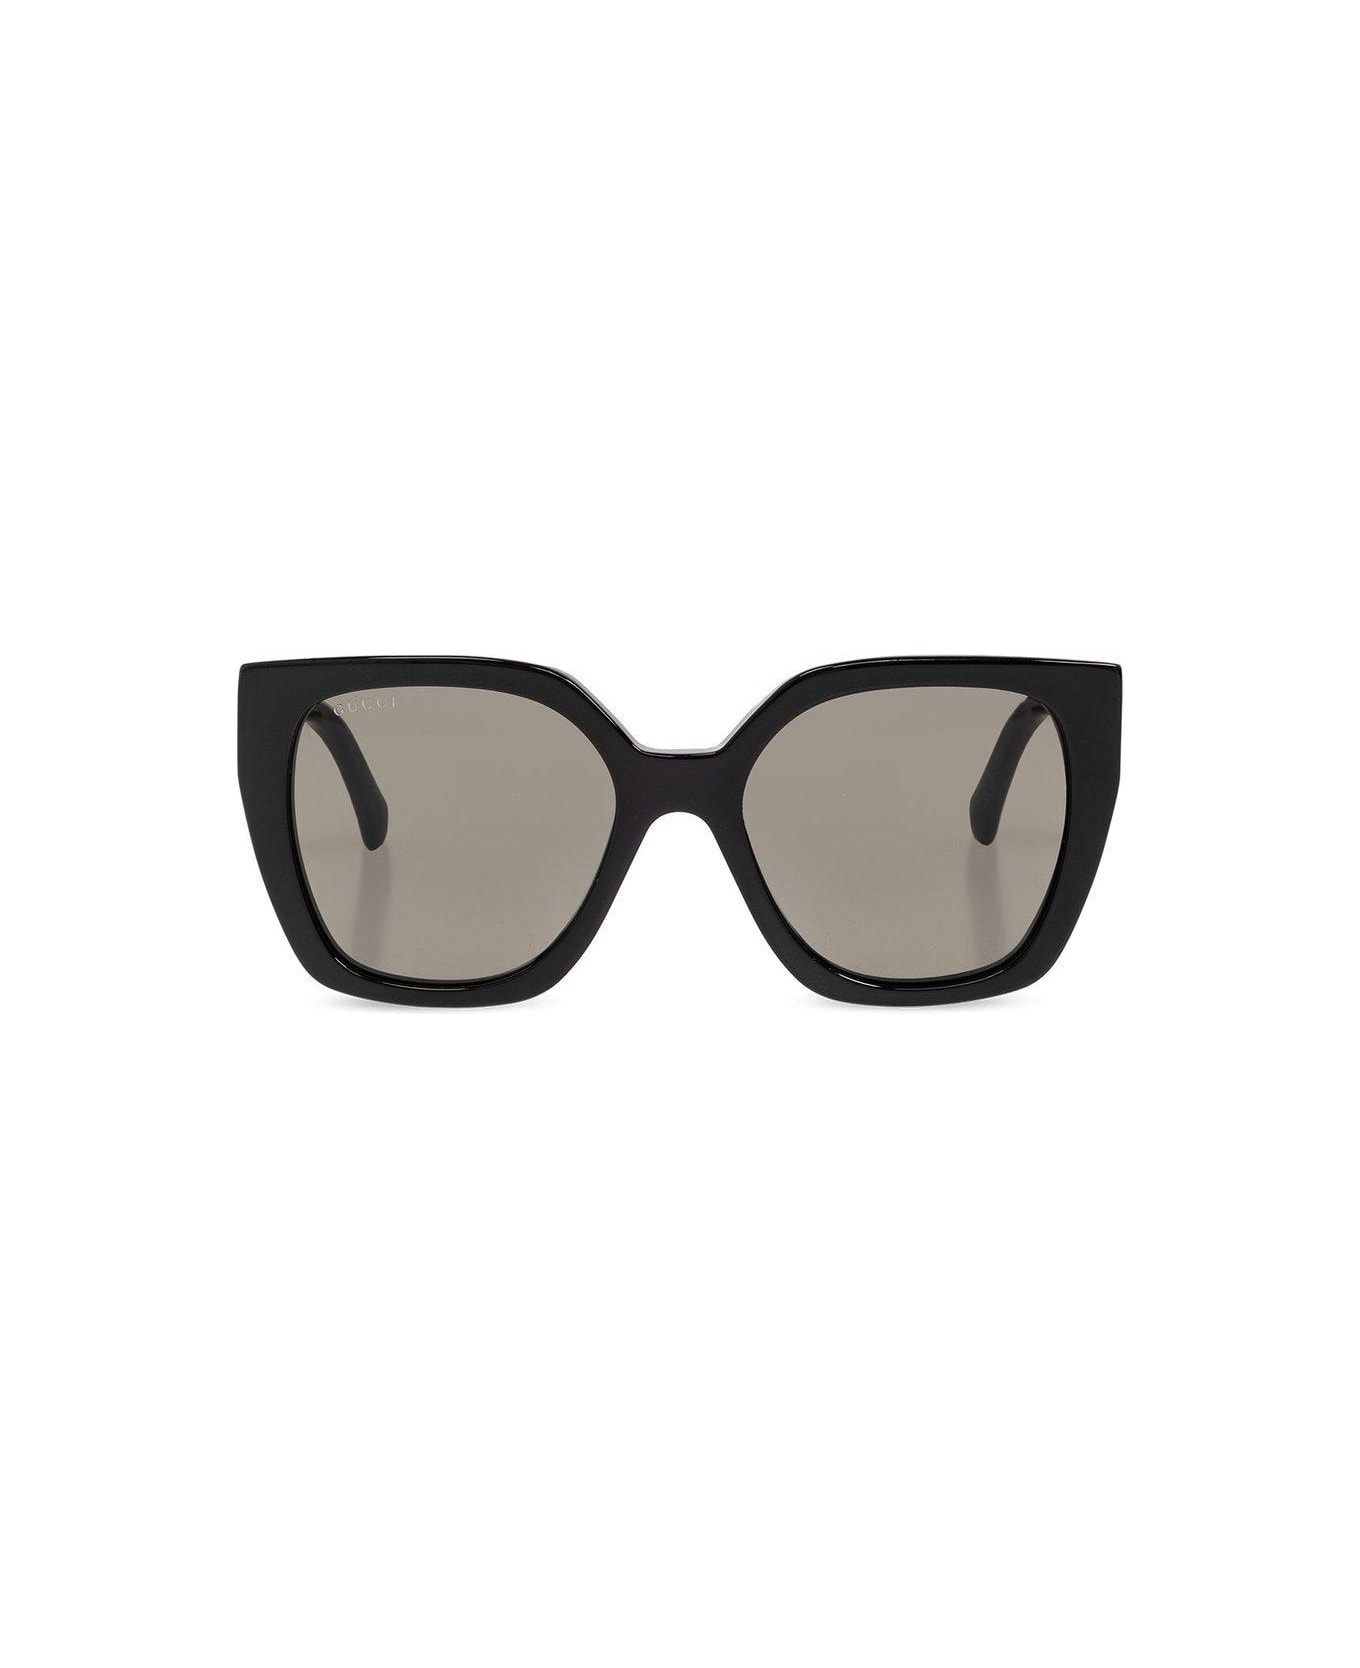 Gucci Eyewear Square Framed Sunglasses サングラス